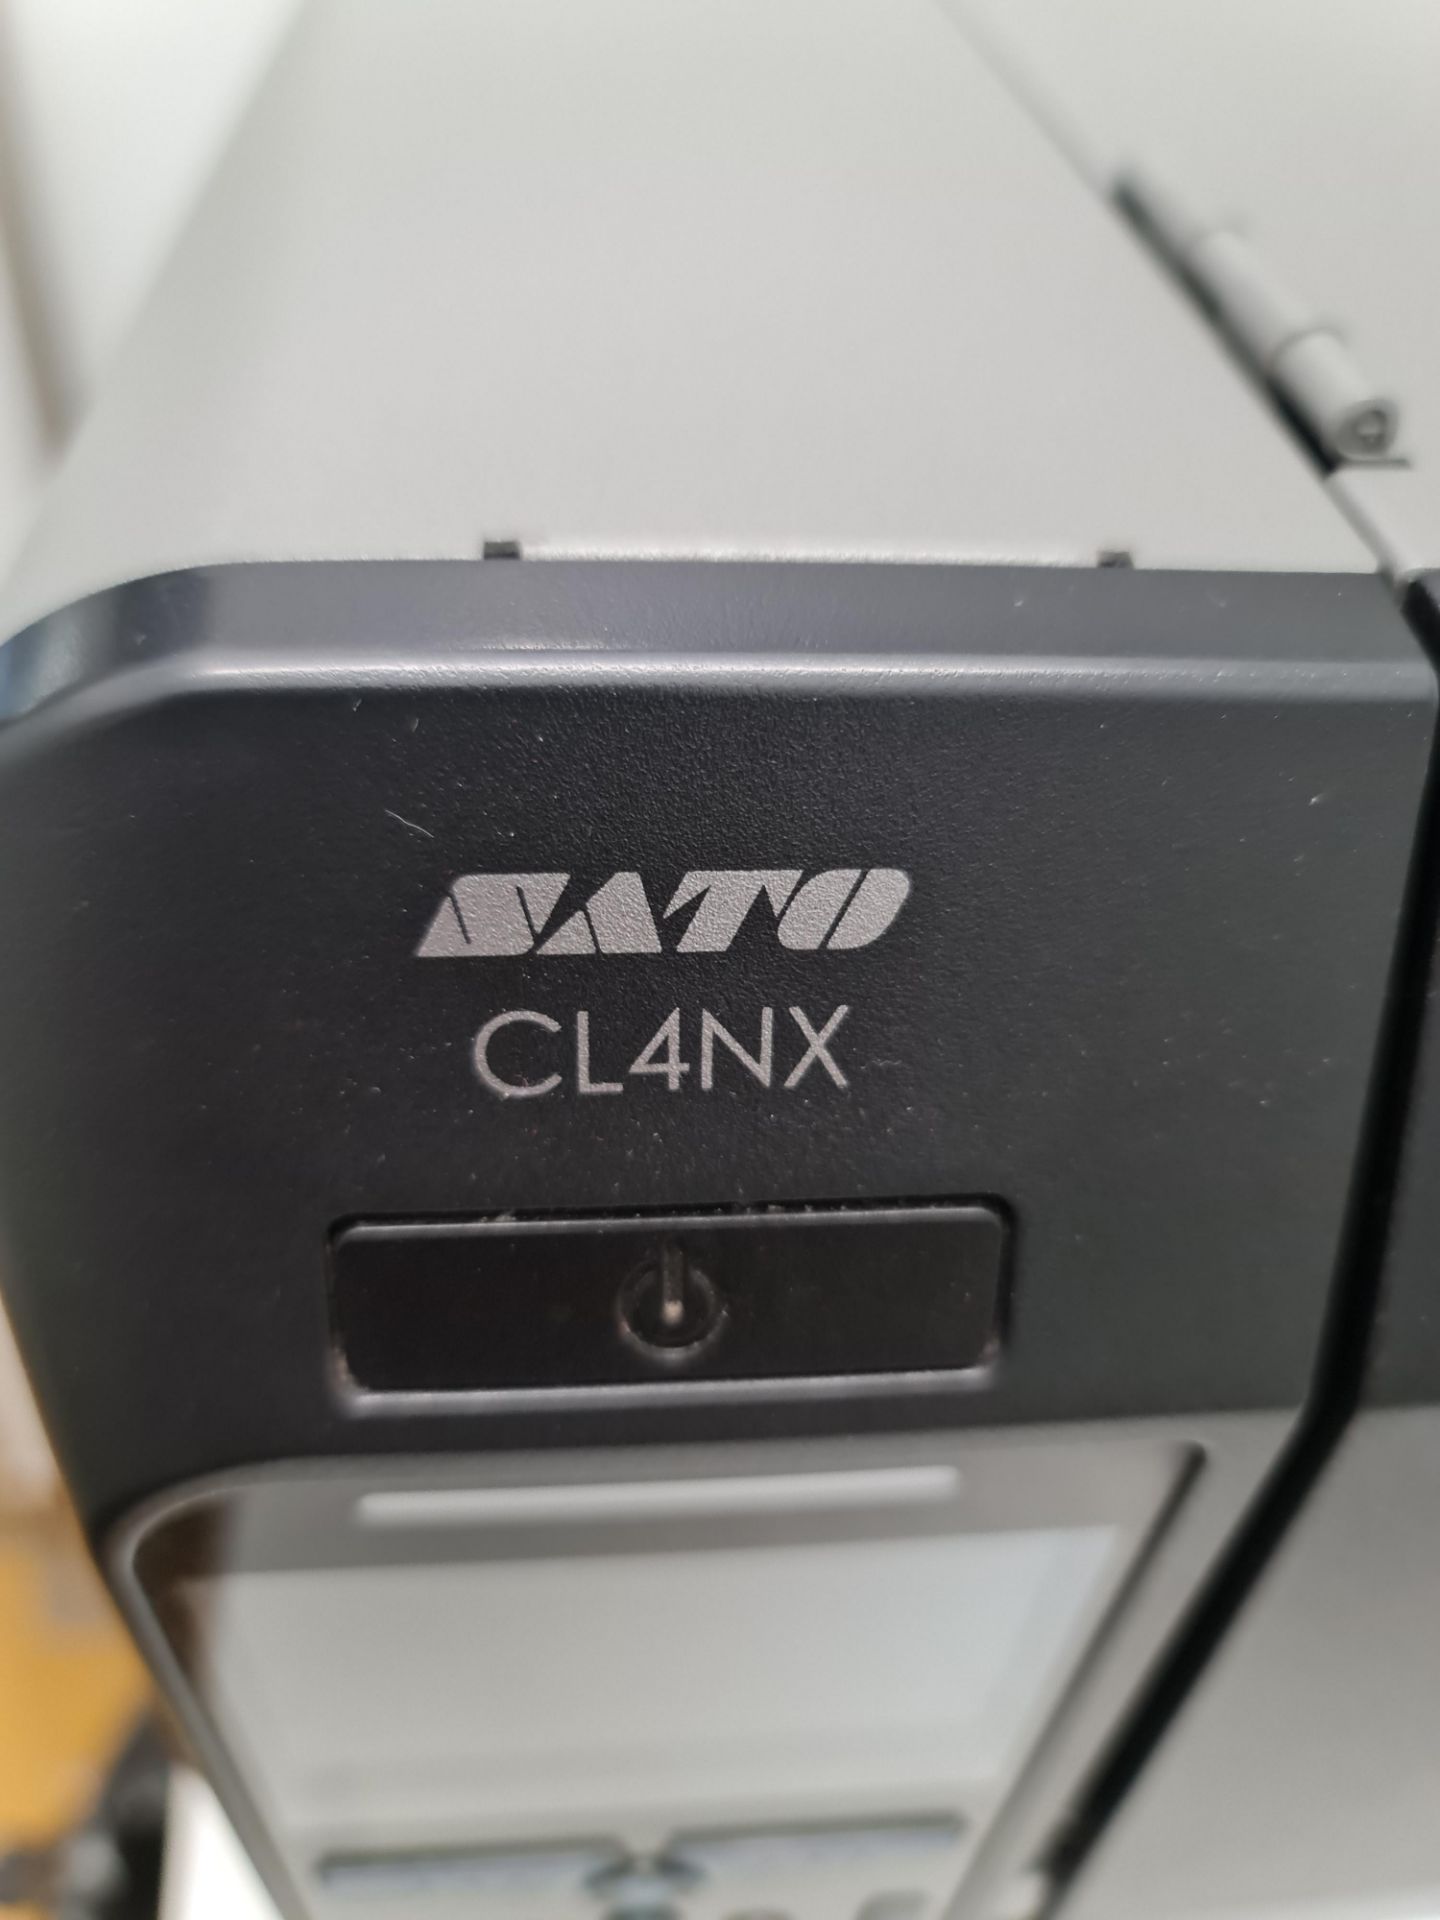 Nato CL4NX label printer - Image 2 of 3